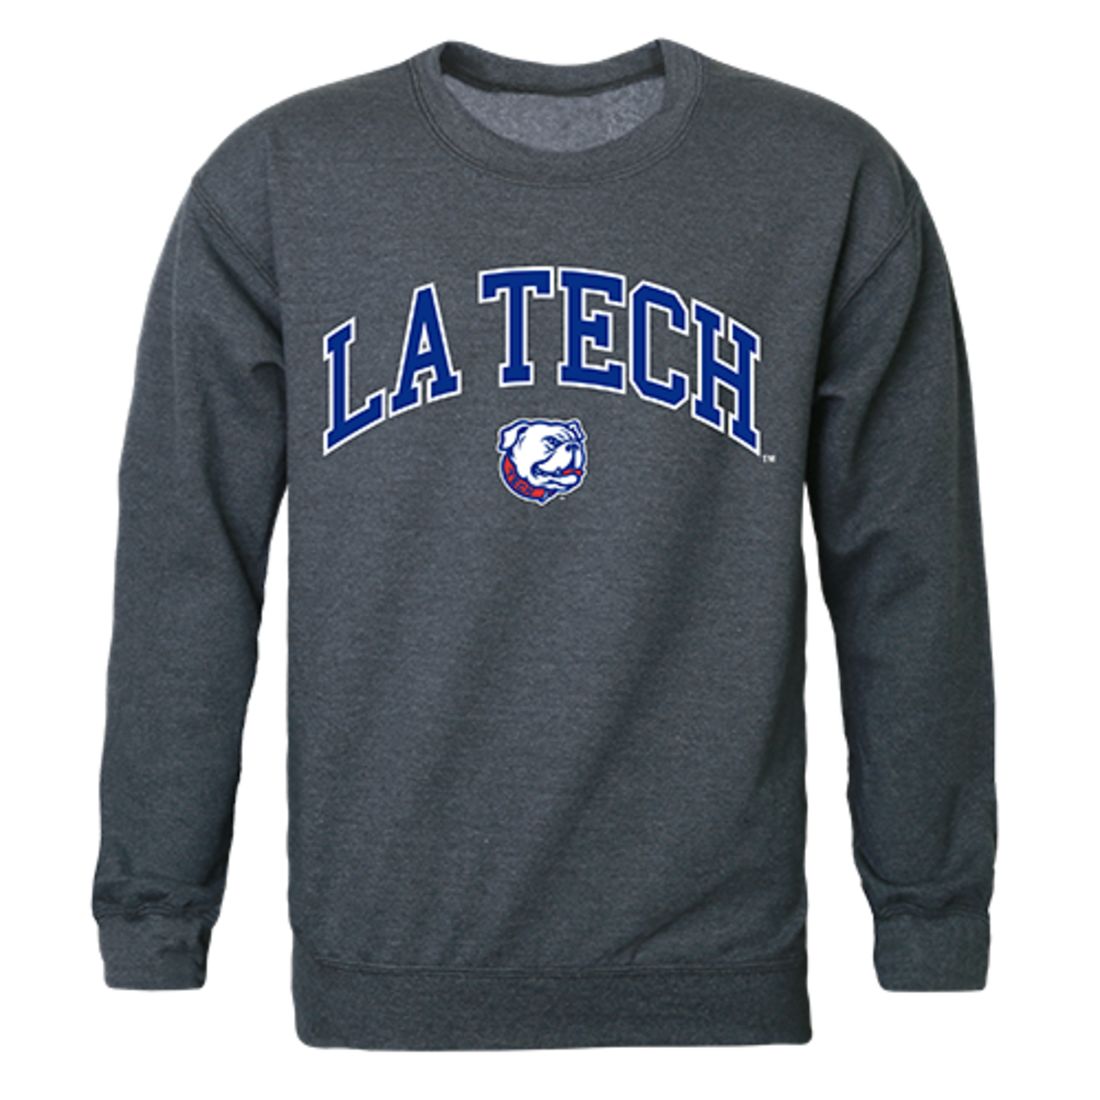 Louisiana Tech University Campus Crewneck Pullover Sweatshirt Sweater Heather Charcoal-Campus-Wardrobe